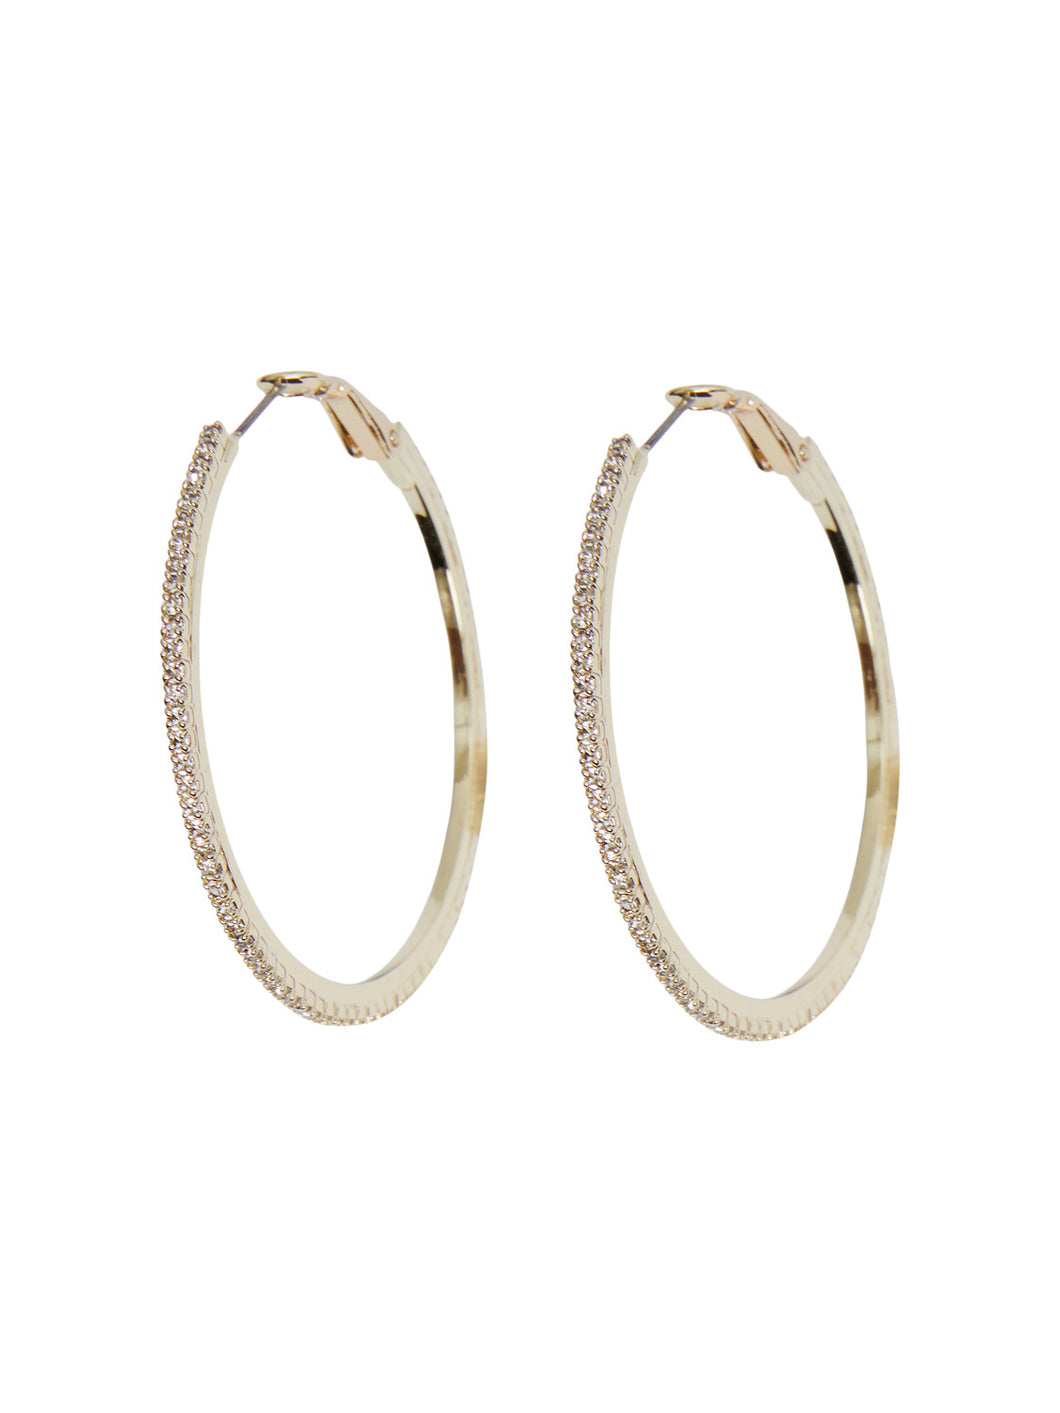 PCOLIA Earrings - Gold Colour